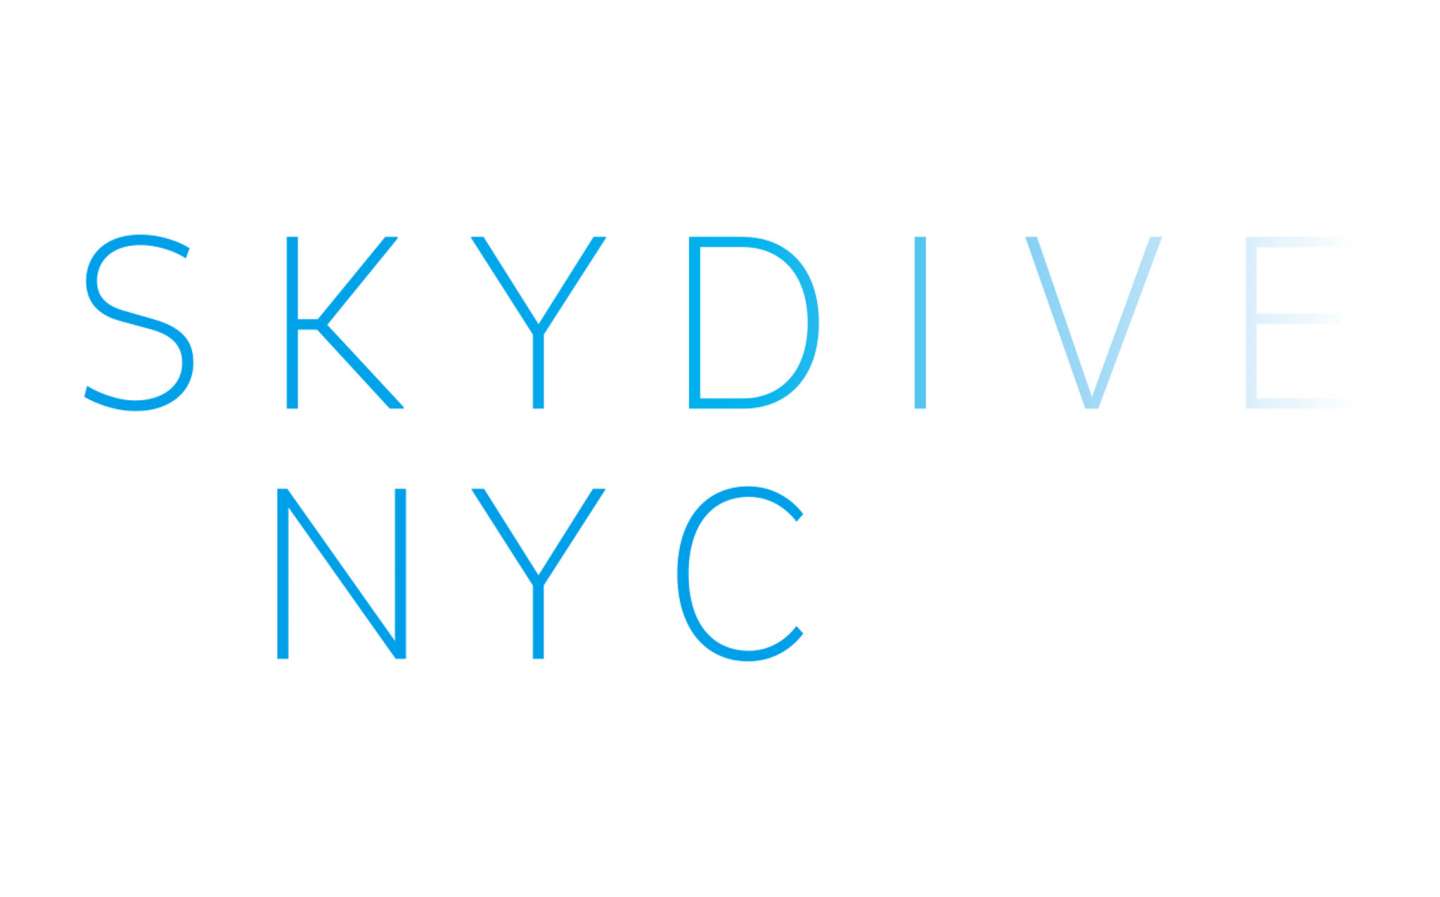 SkyDive NYC